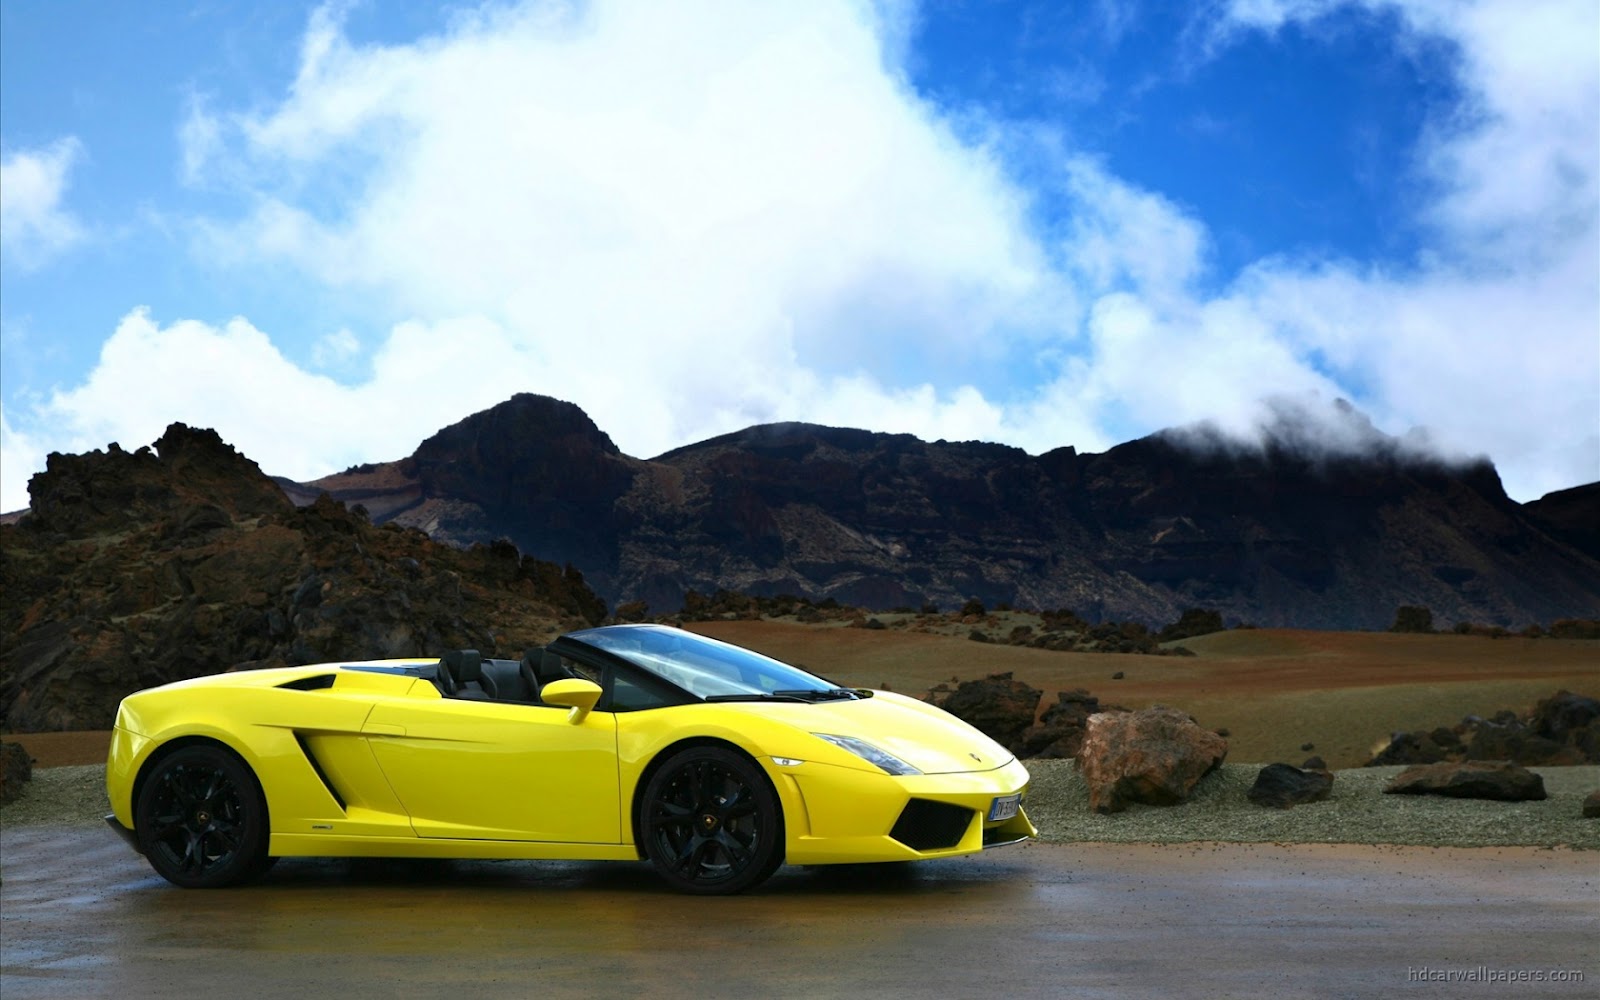 Lamborghini & Widescreen Lamborghini Wallpapers from the above ...